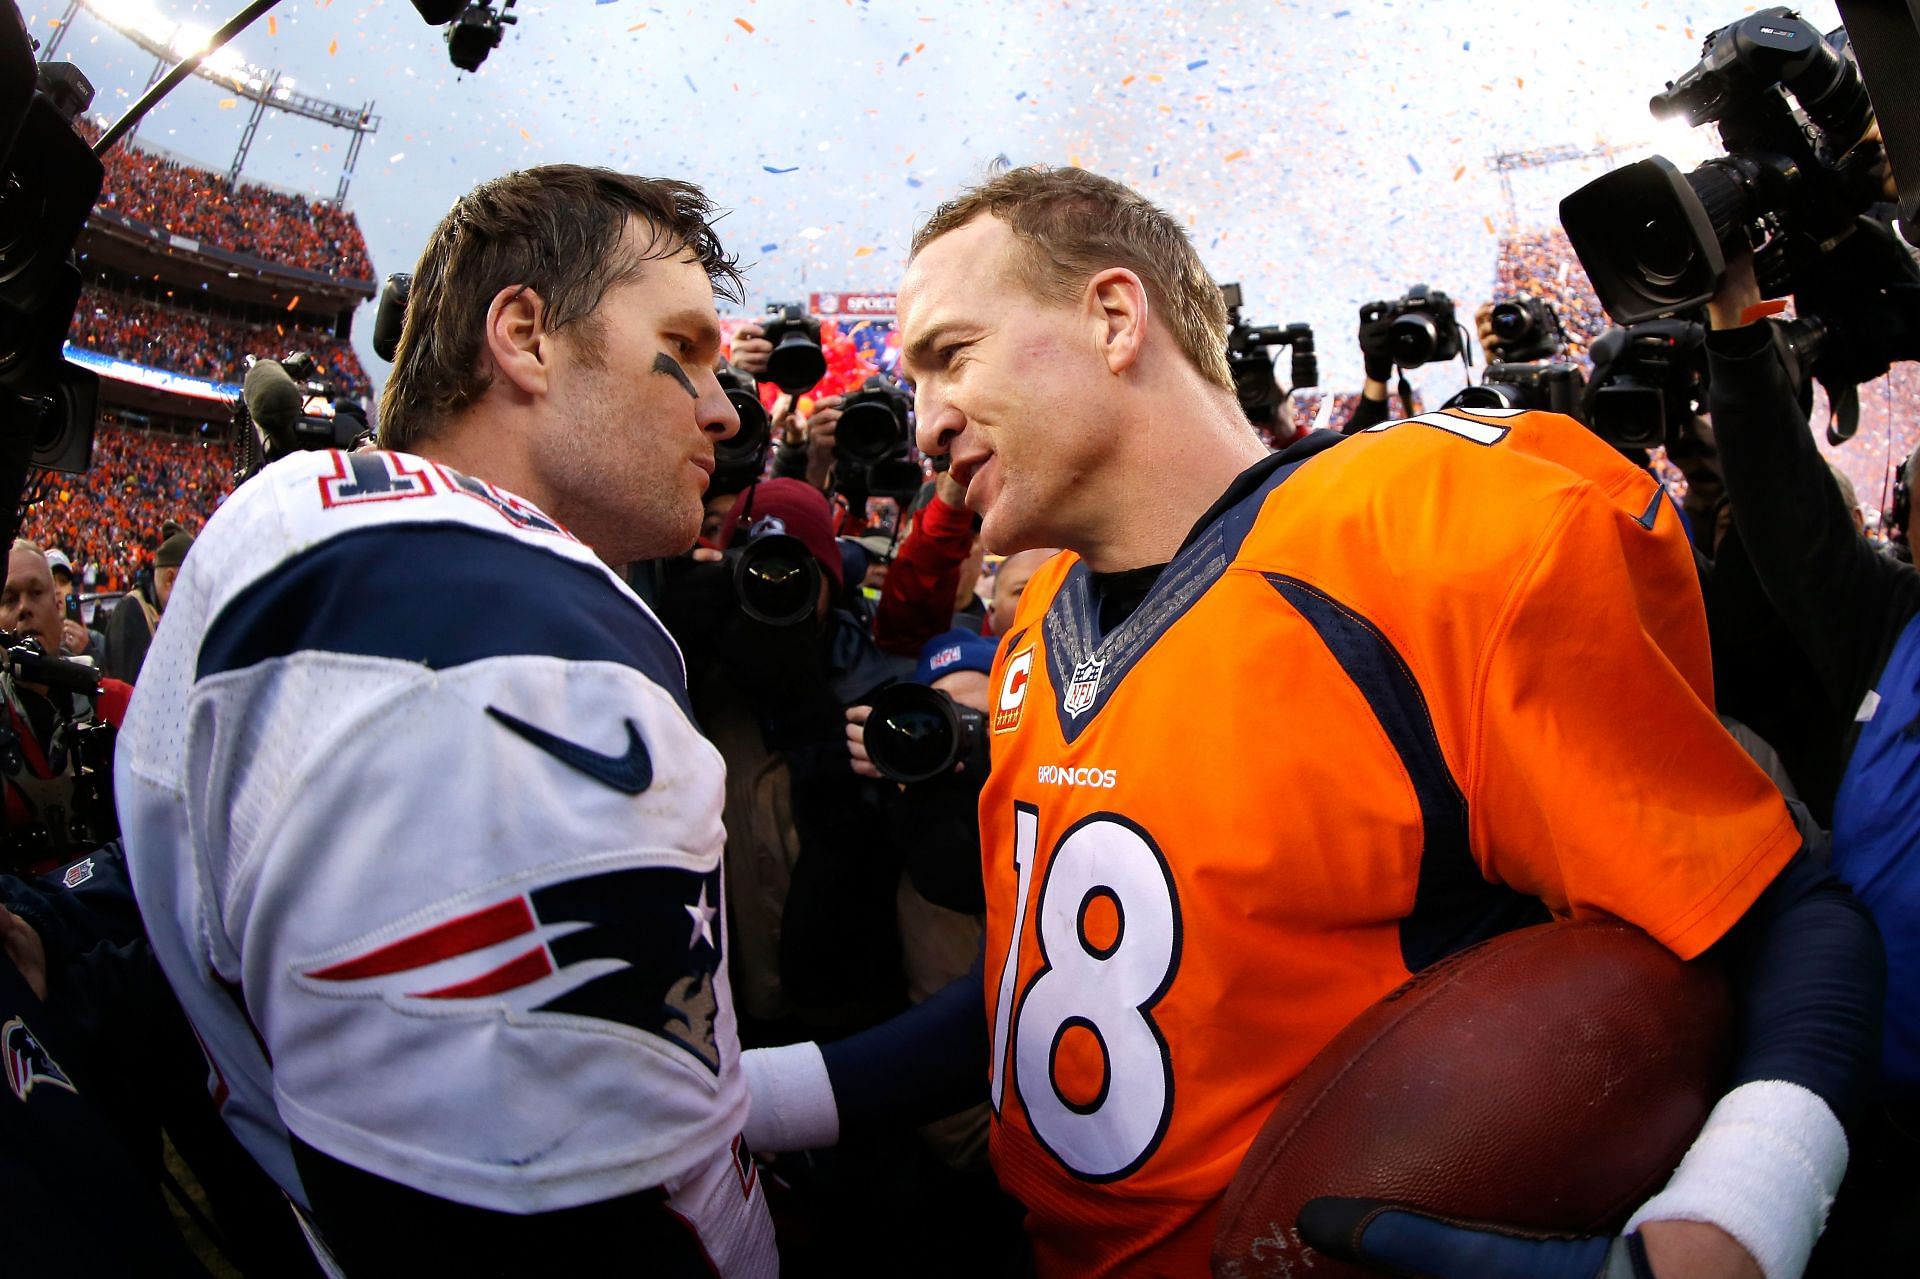 NFL QBs Tom Brady and Peyton Manning